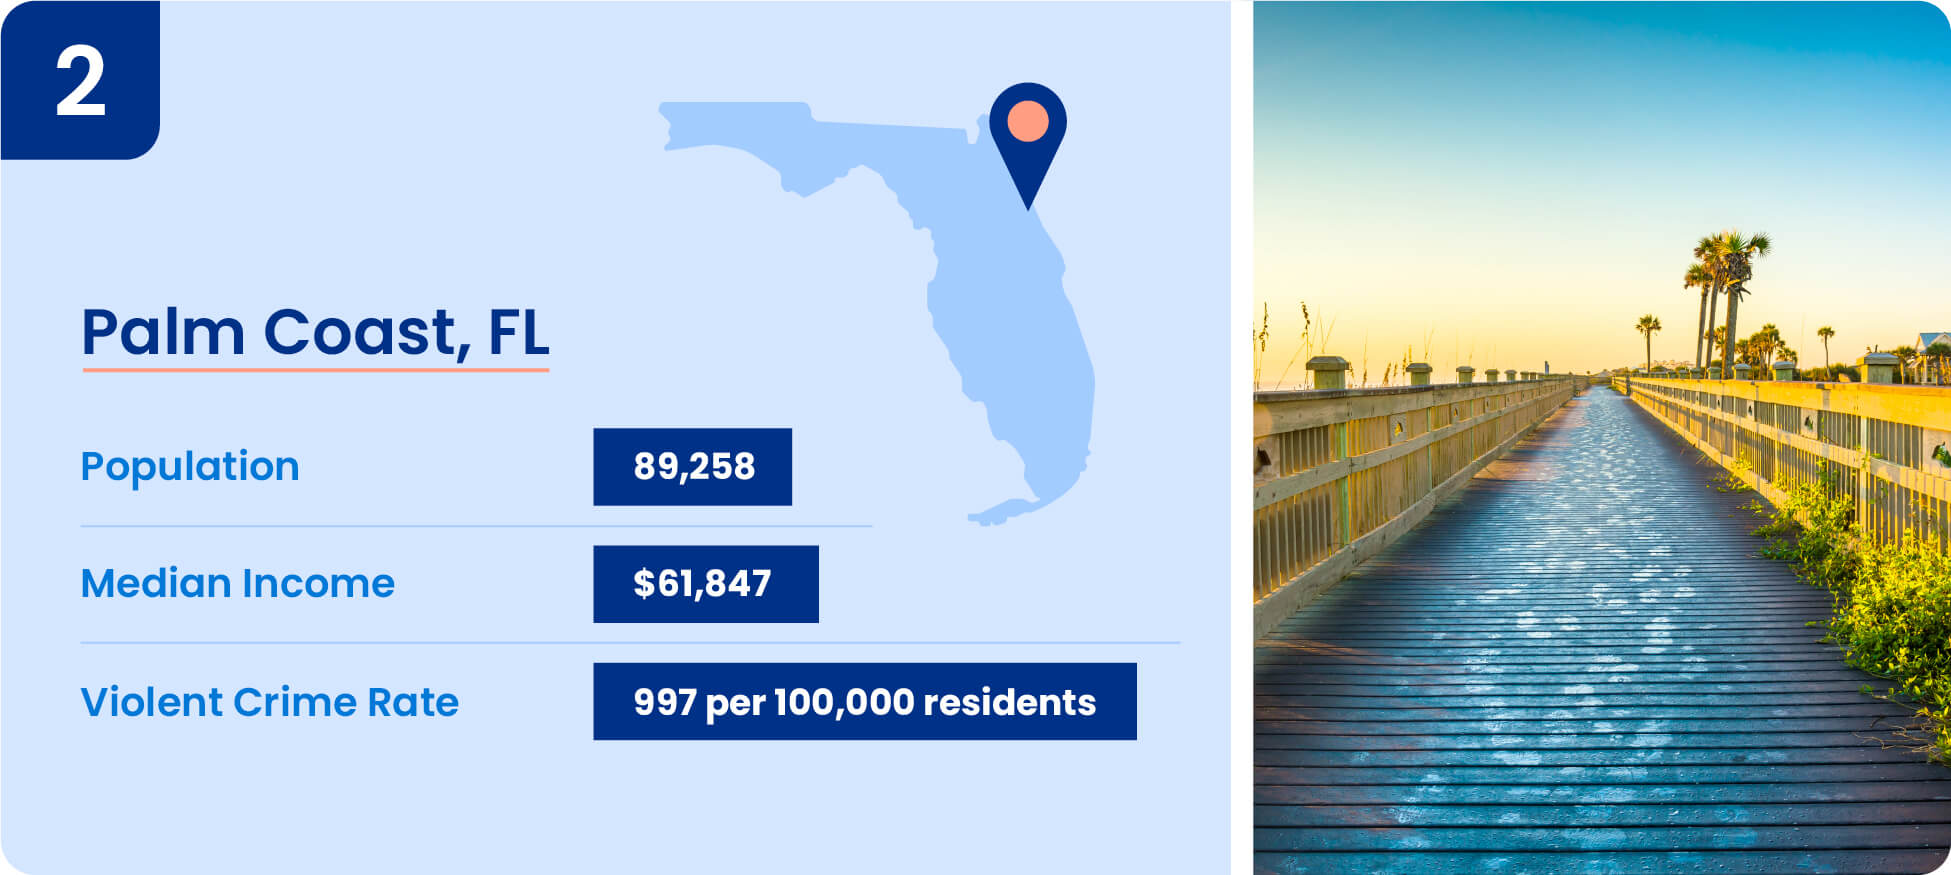 Image shows safety data including median income, population, and violent crime rate for Palm Coast, Florida.